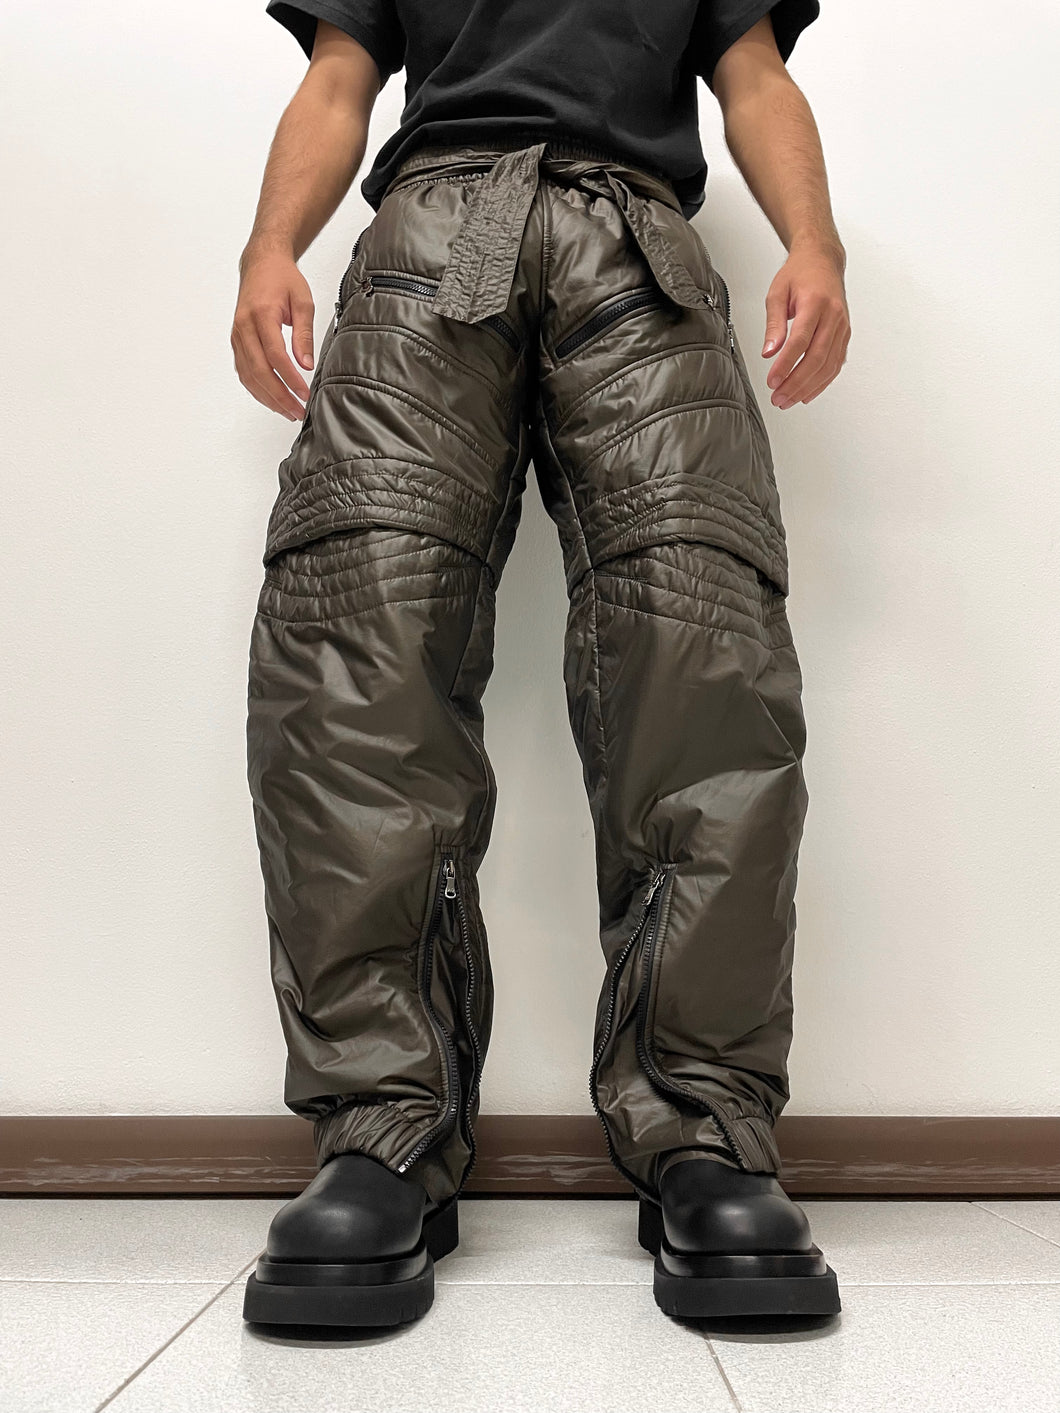 AW2010 Dolce & Gabbana astronaut cargo pants